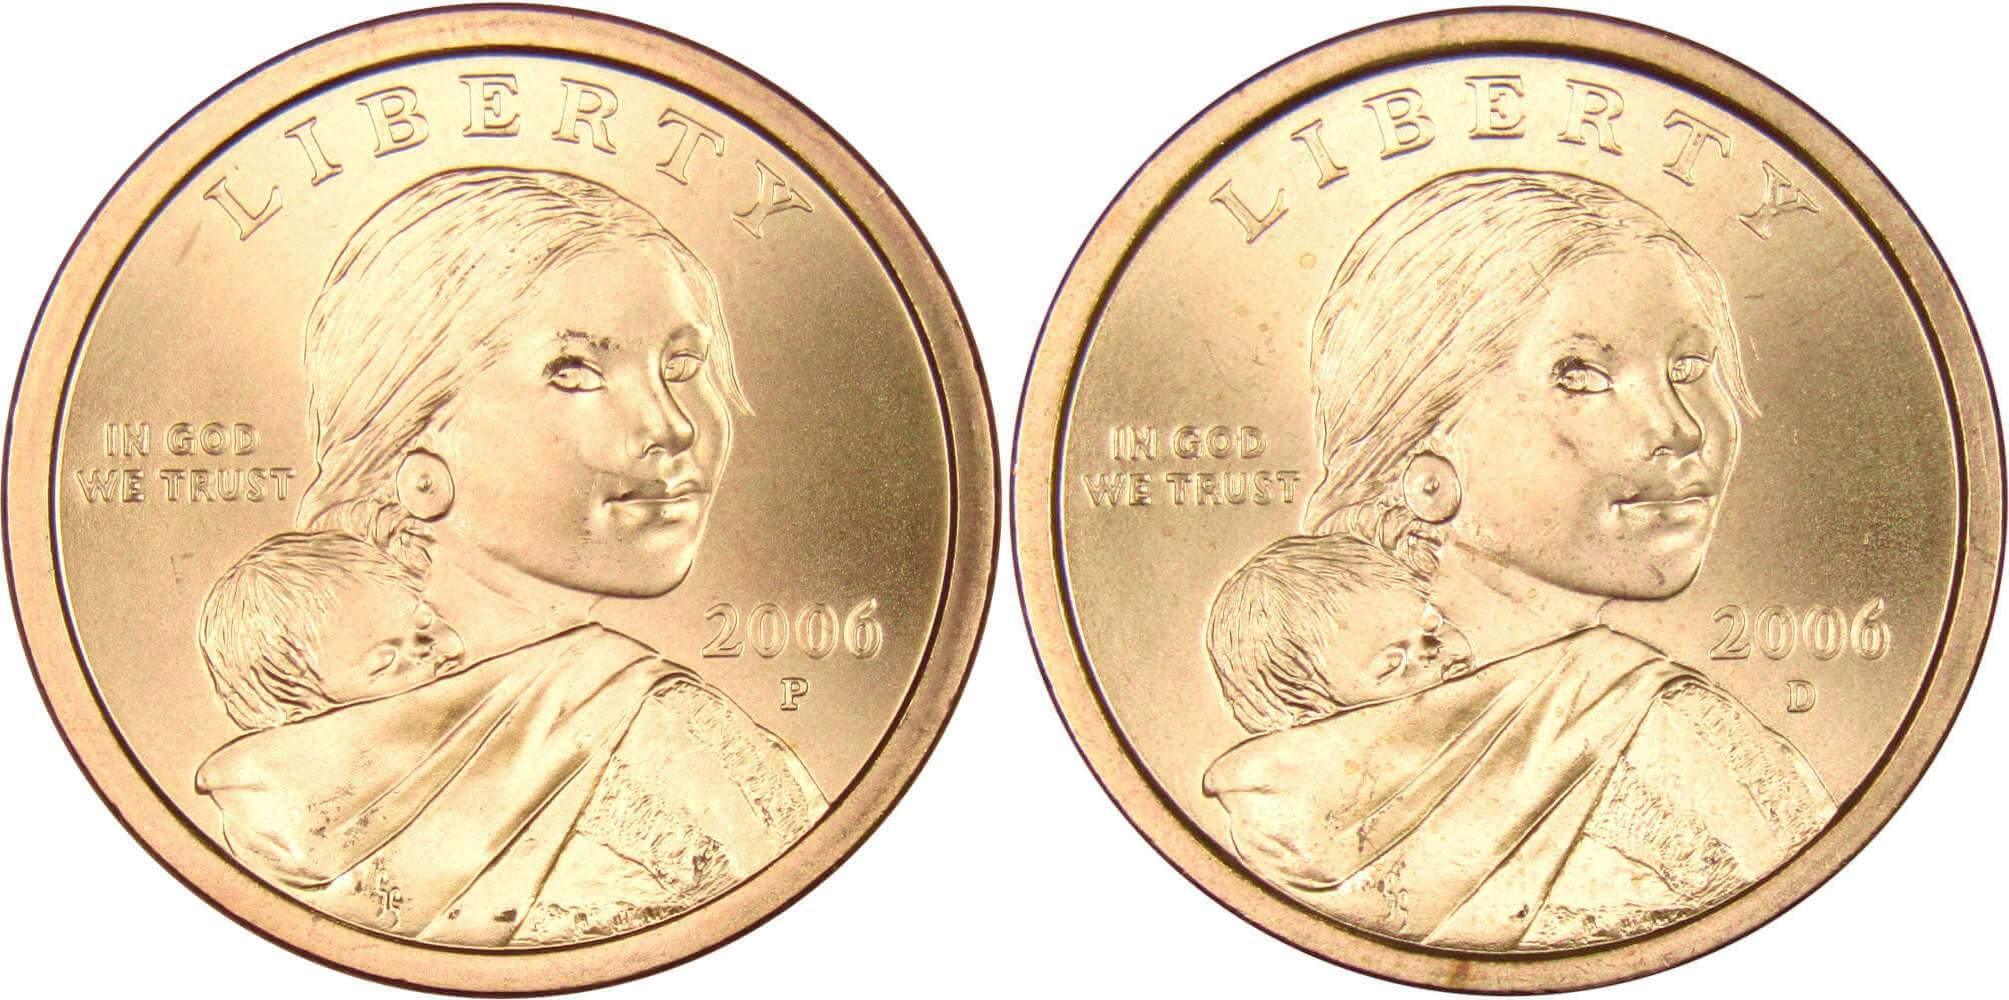 2006 P&D Sacagawea Native American Dollar 2 Coin Set BU Uncirculated $1